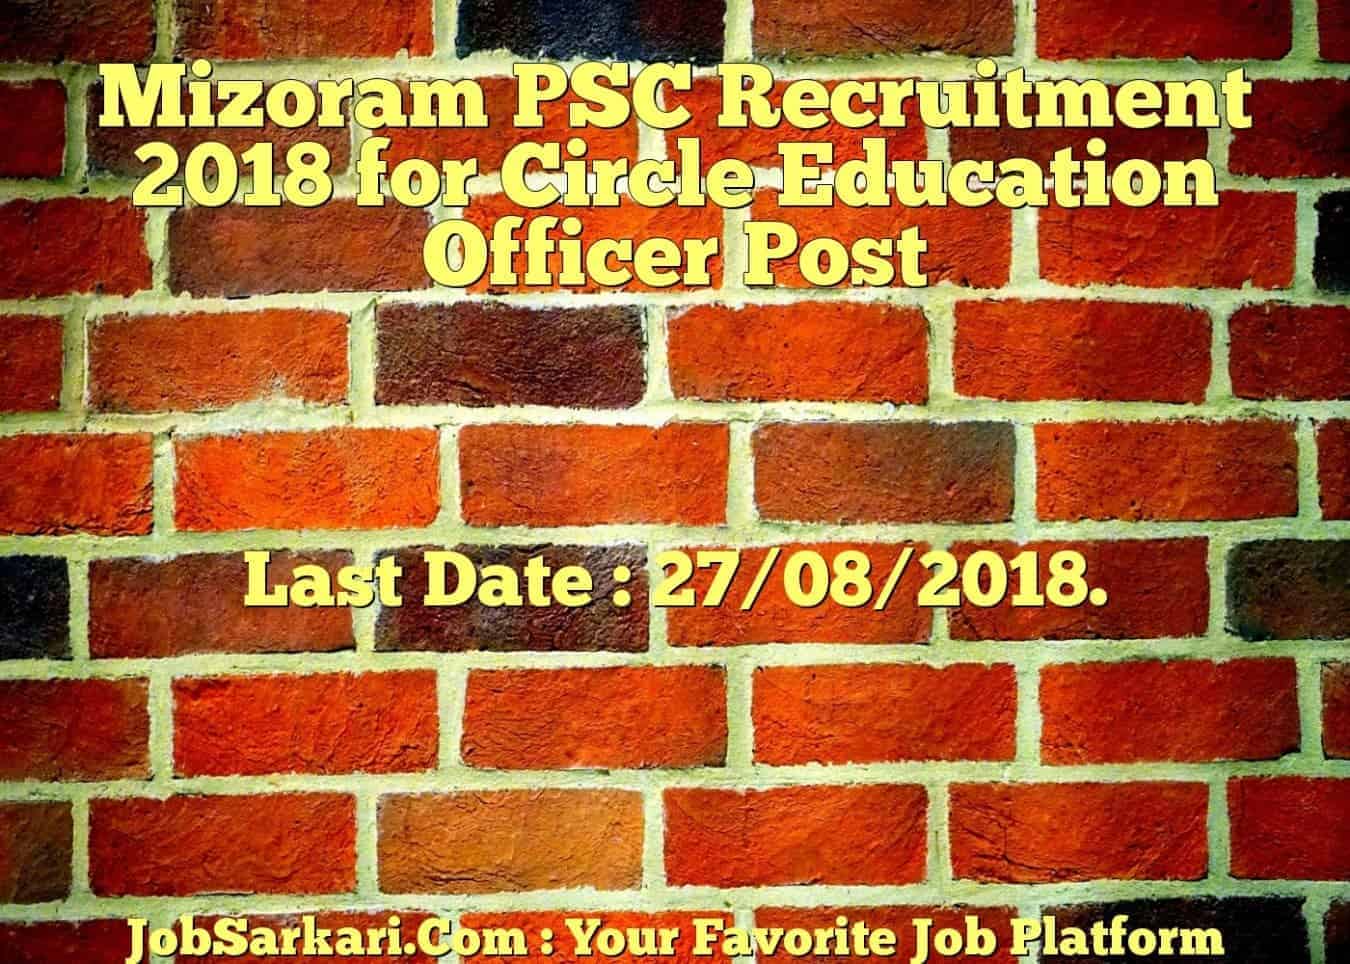 Mizoram PSC Recruitment 2018 for Circle Education Officer Post